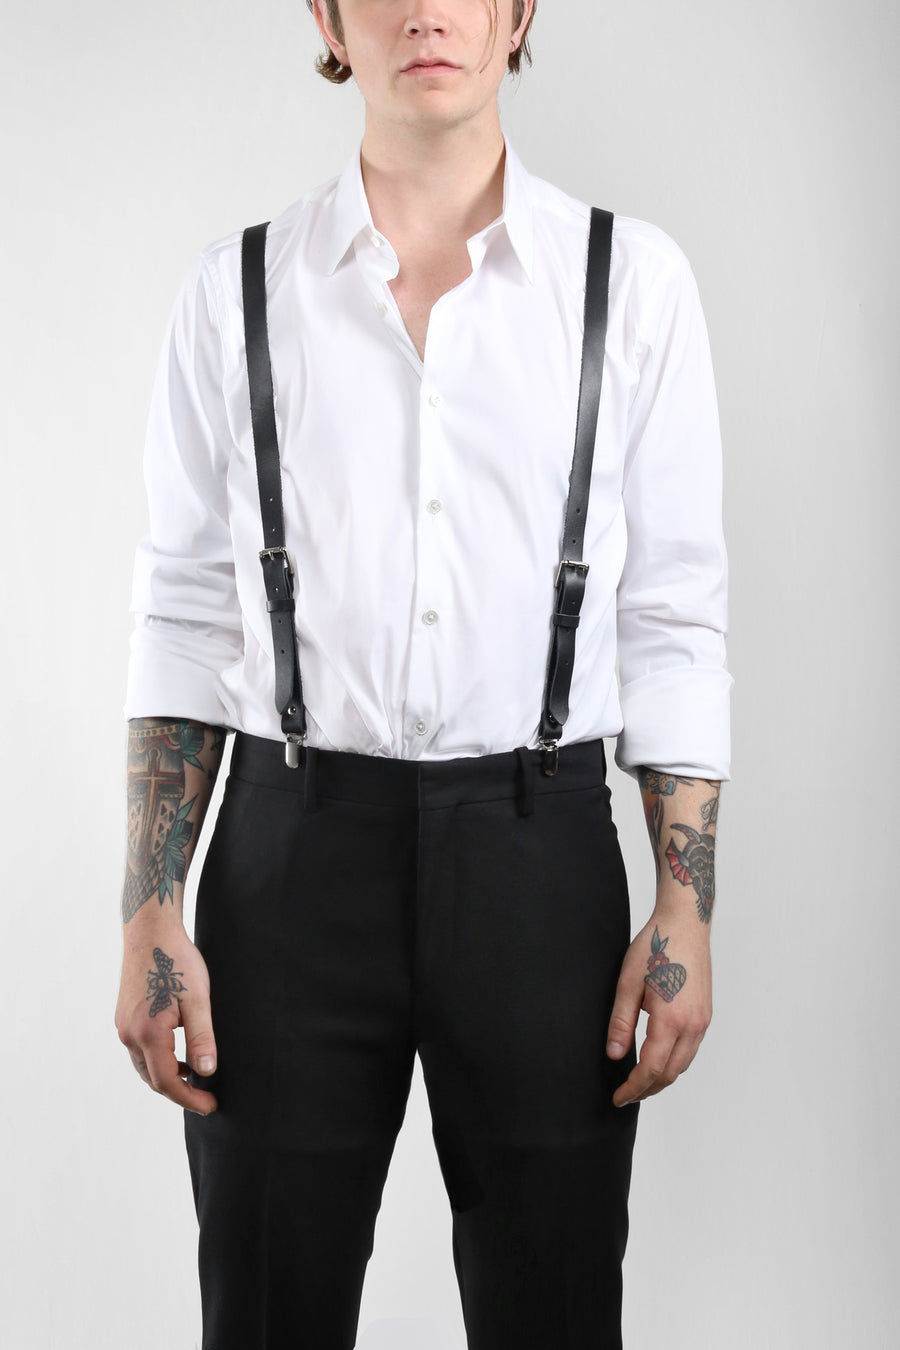 NYX Leather Suspenders - JAKIMAC
 - 1